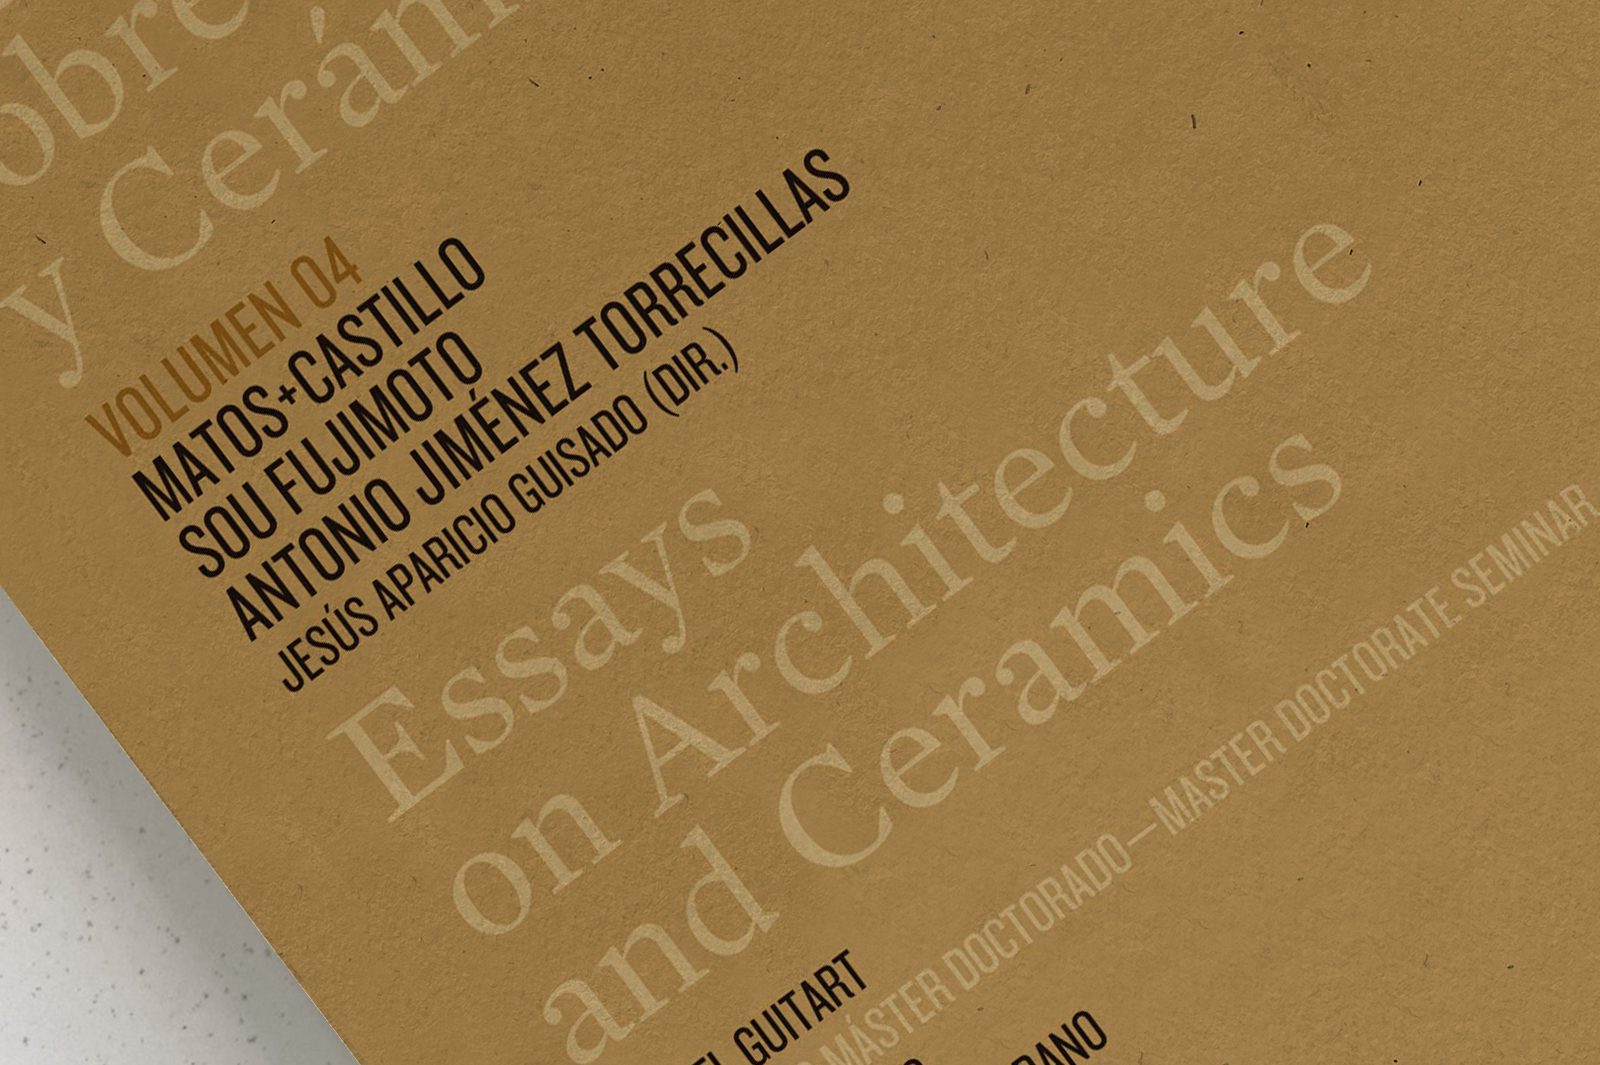 Essays on Architecture and Ceramic IV